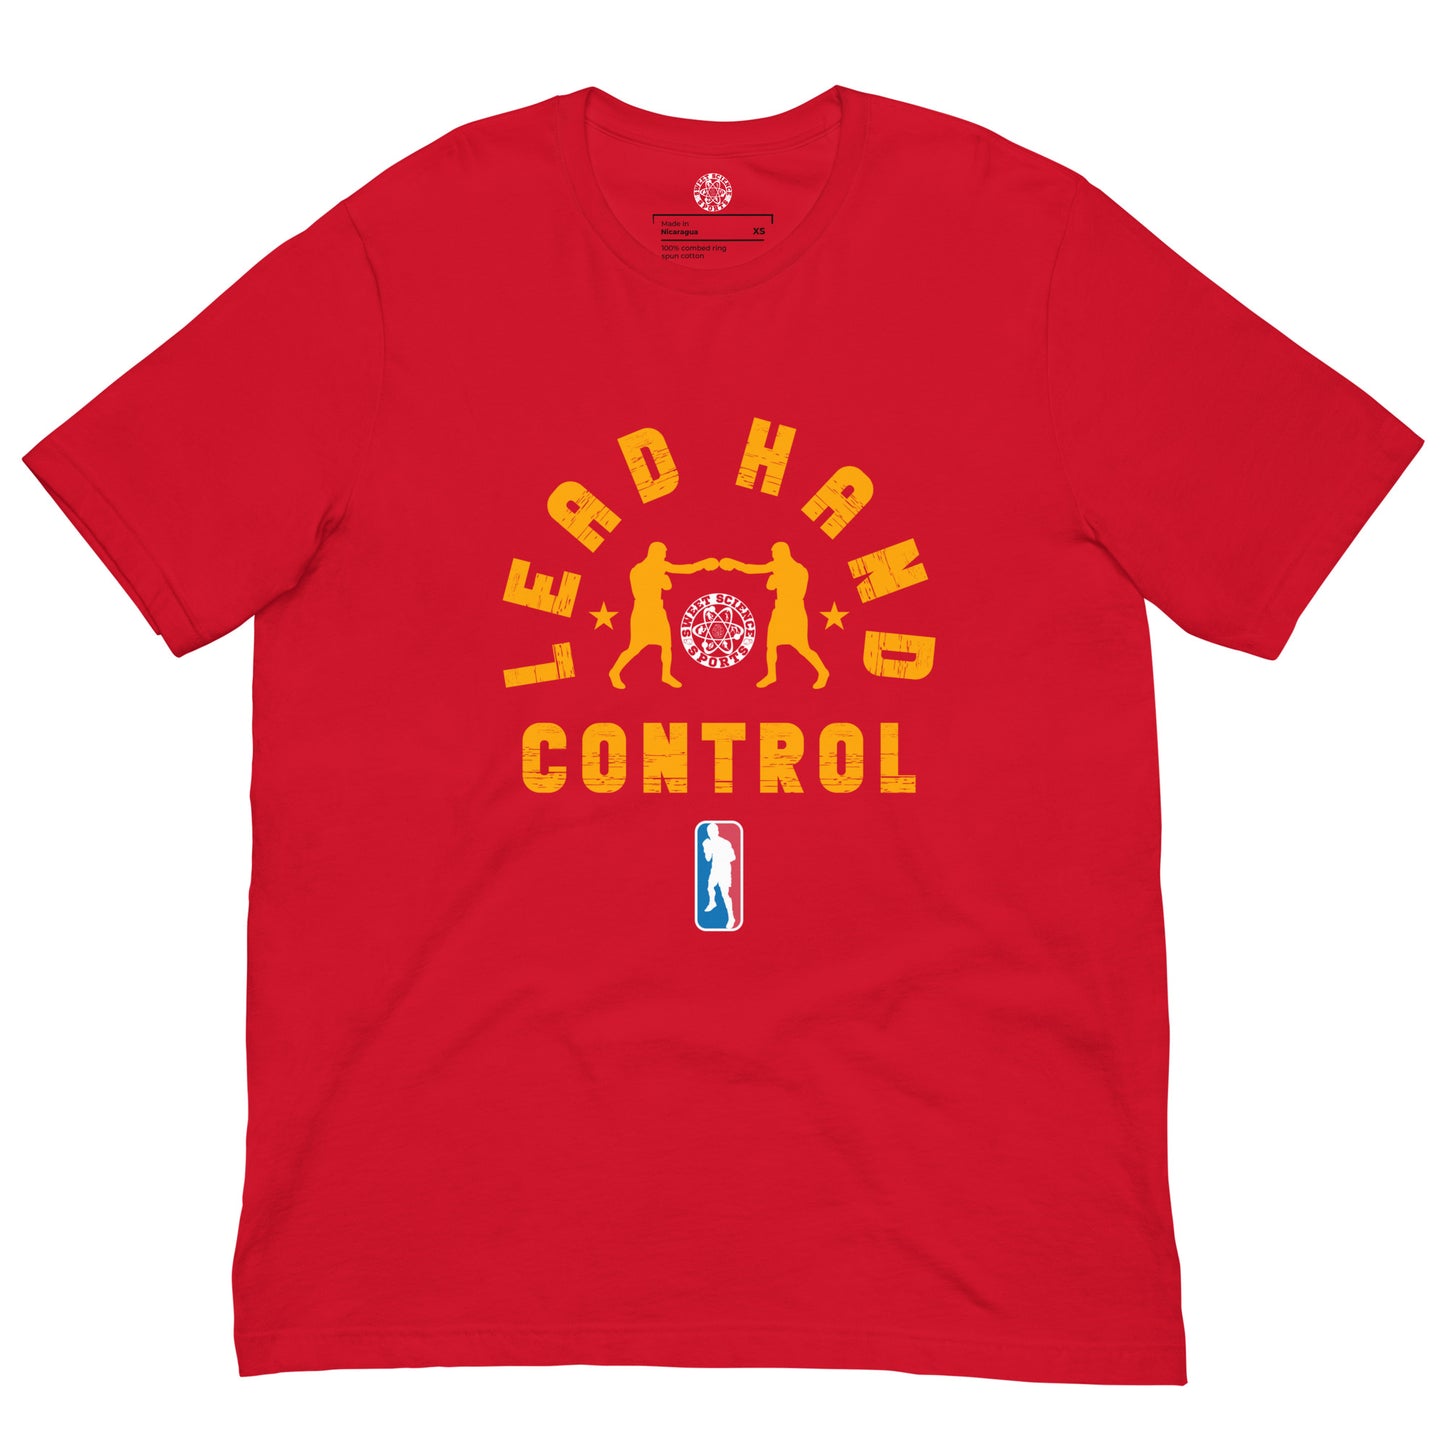 Lead Hand Control  t-shirt